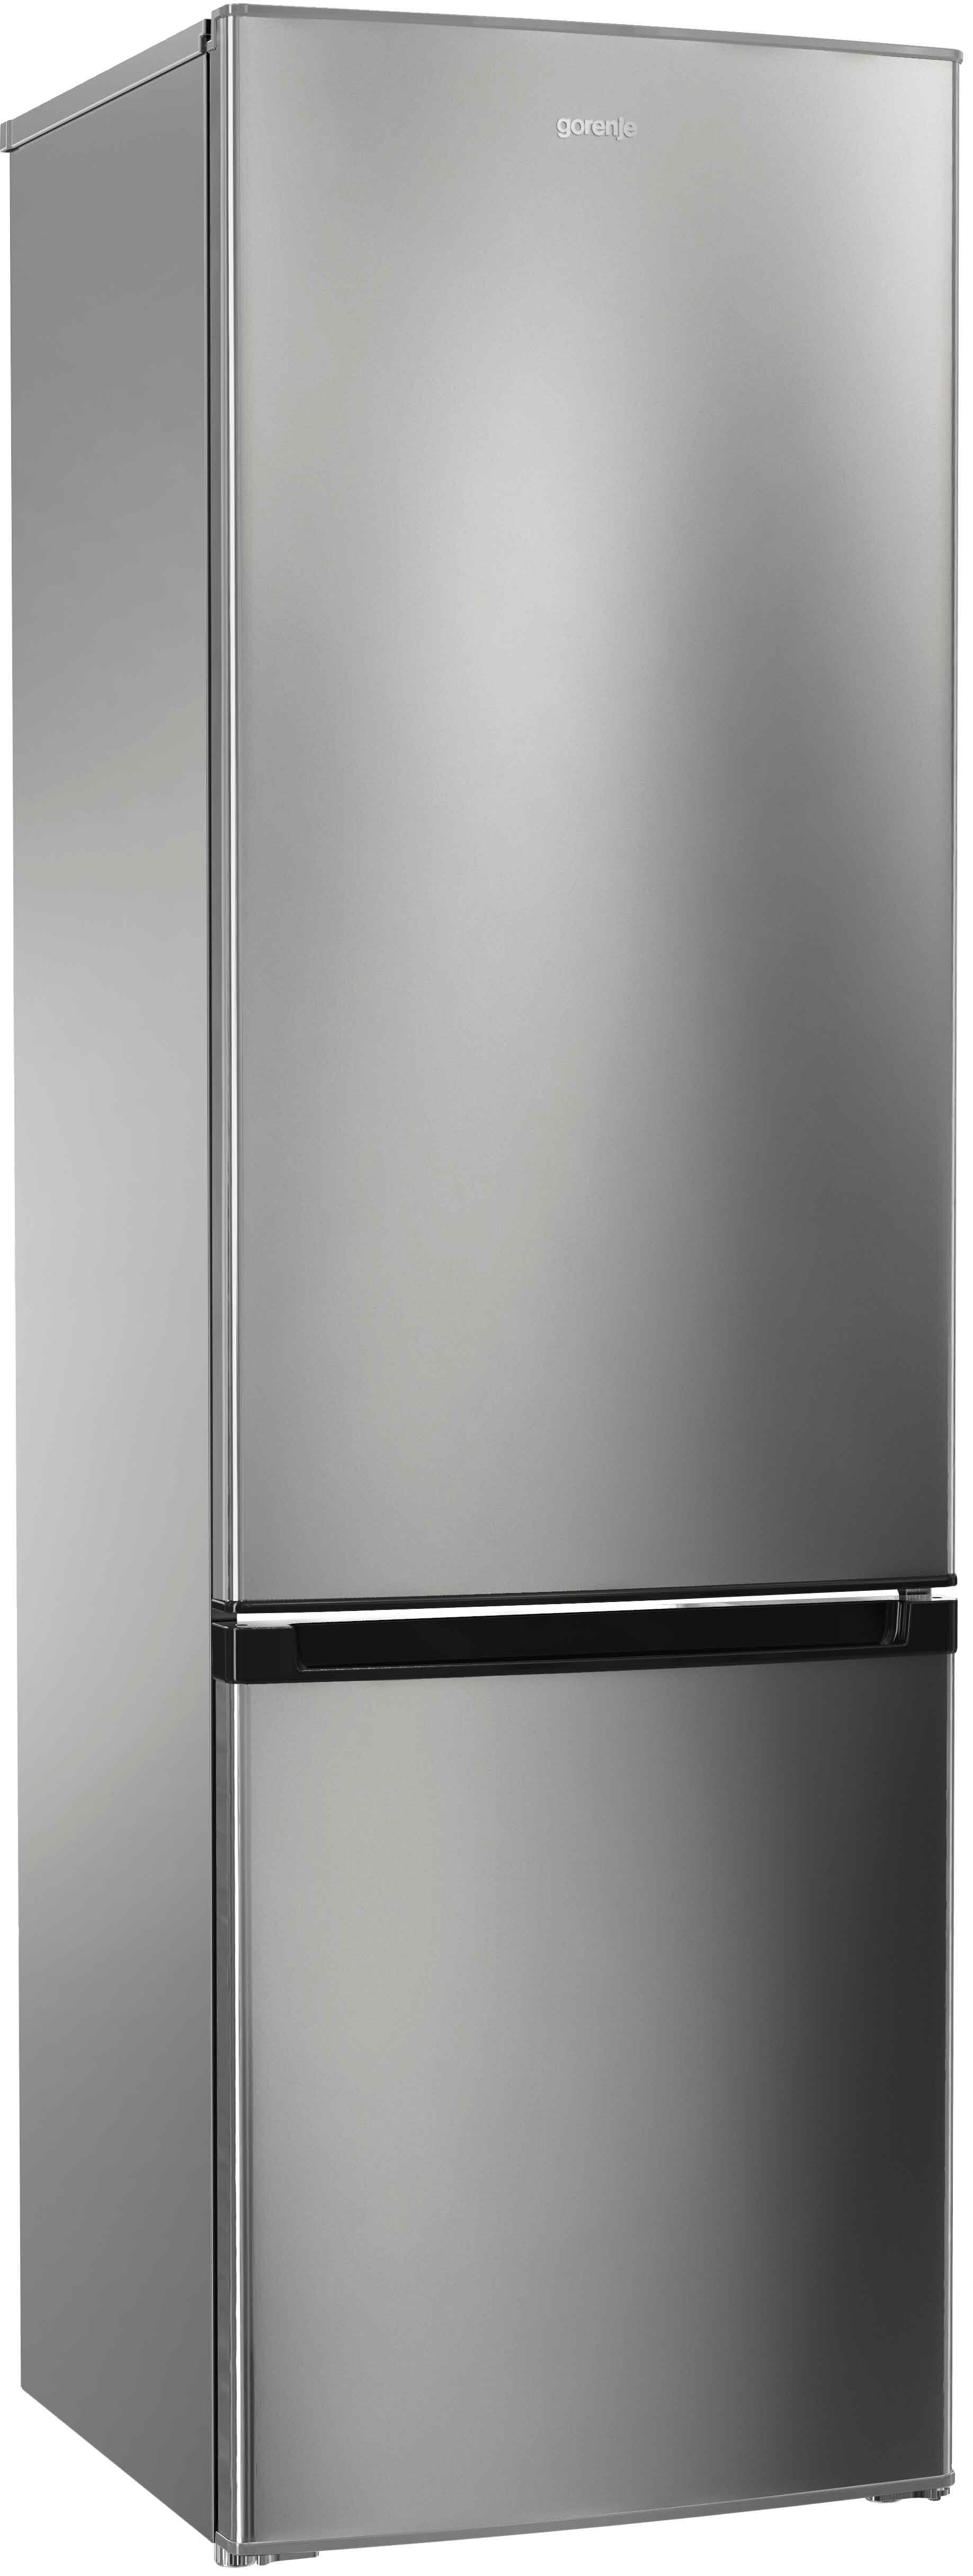 Двухкамерный холодильник Gorenje RK4171ANX